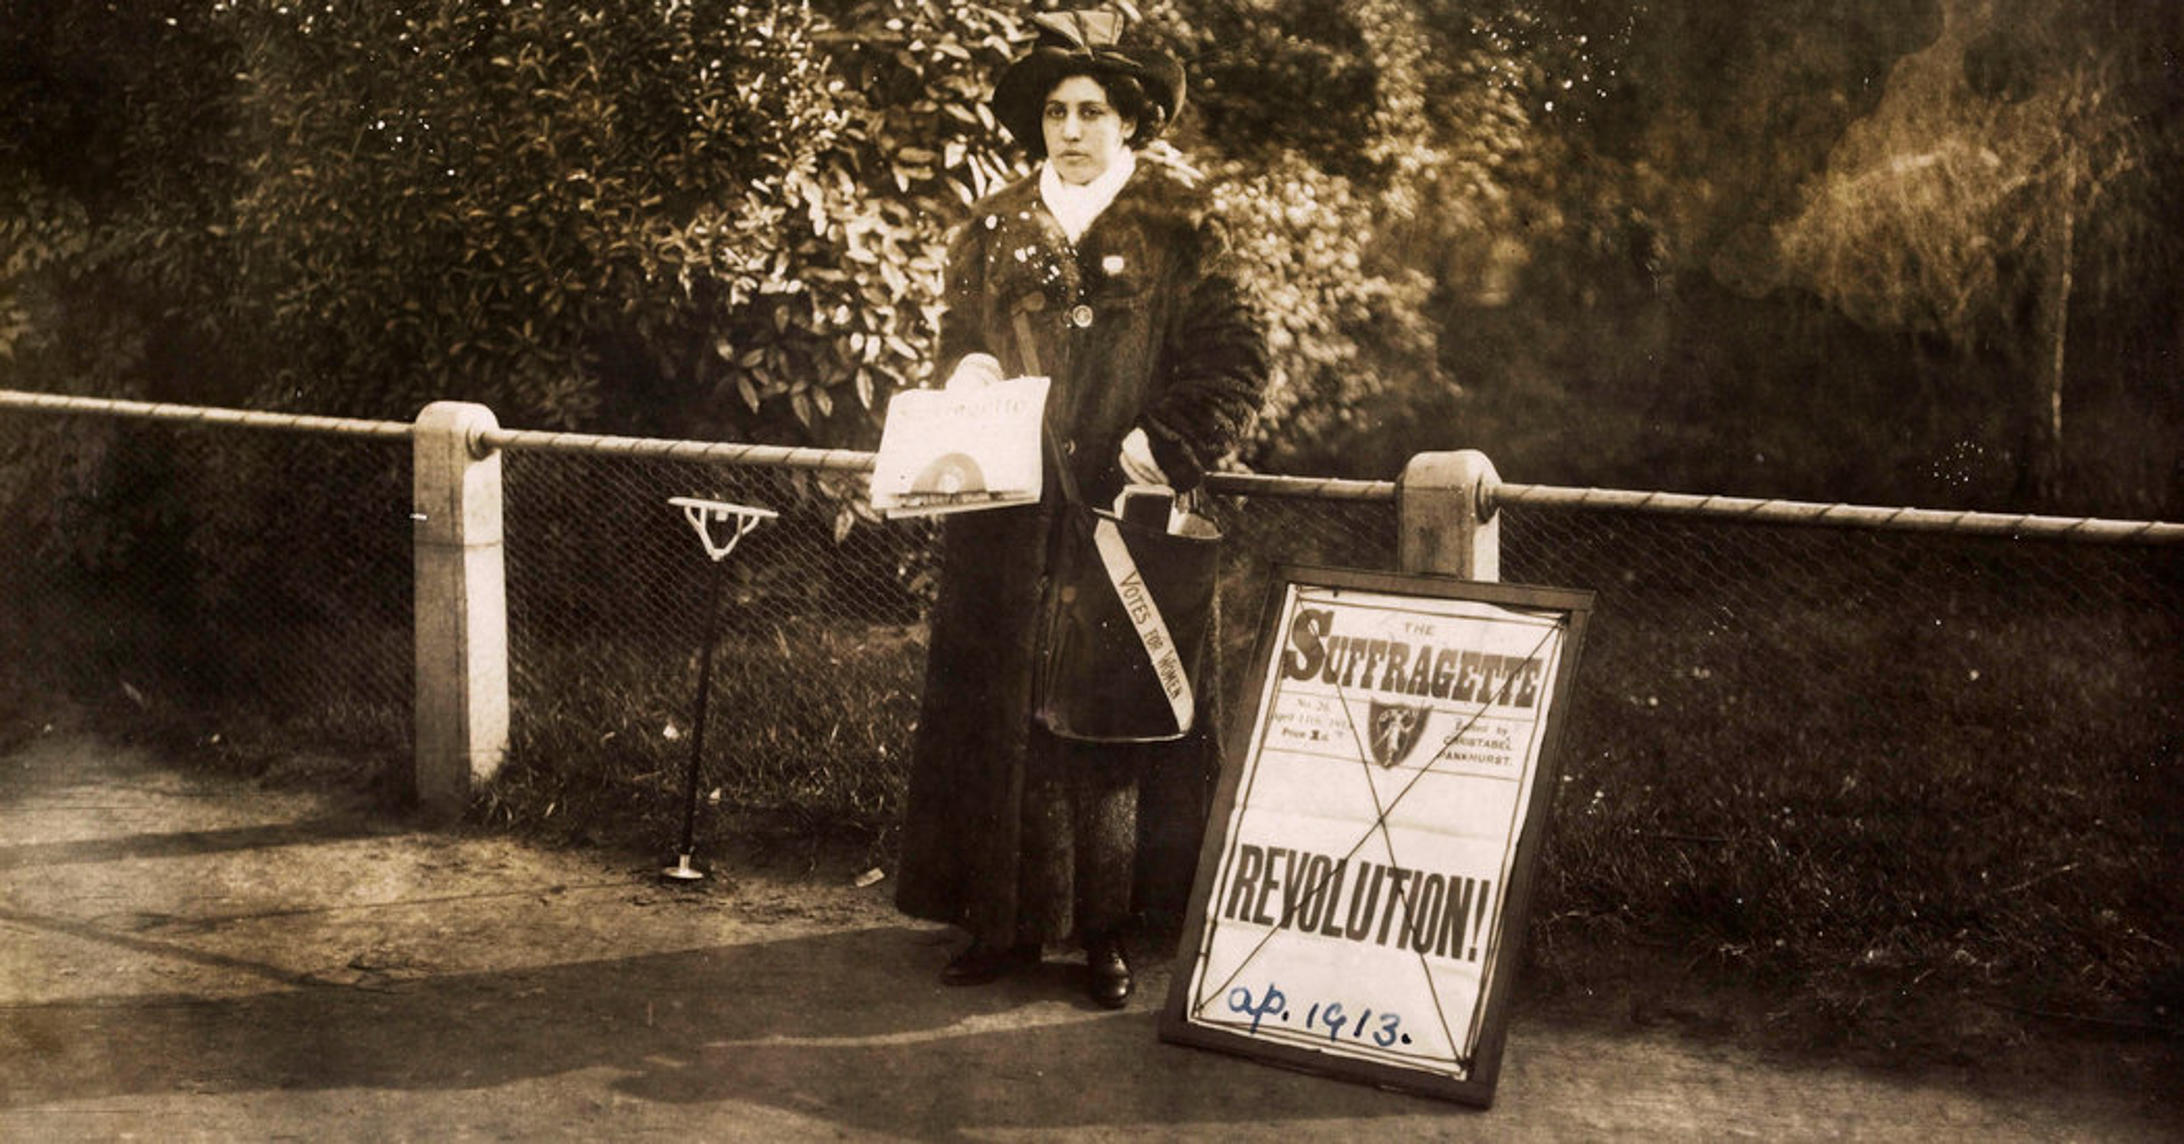 Sophia Duleep Singh selling Sufragette subscriptions in 1913 